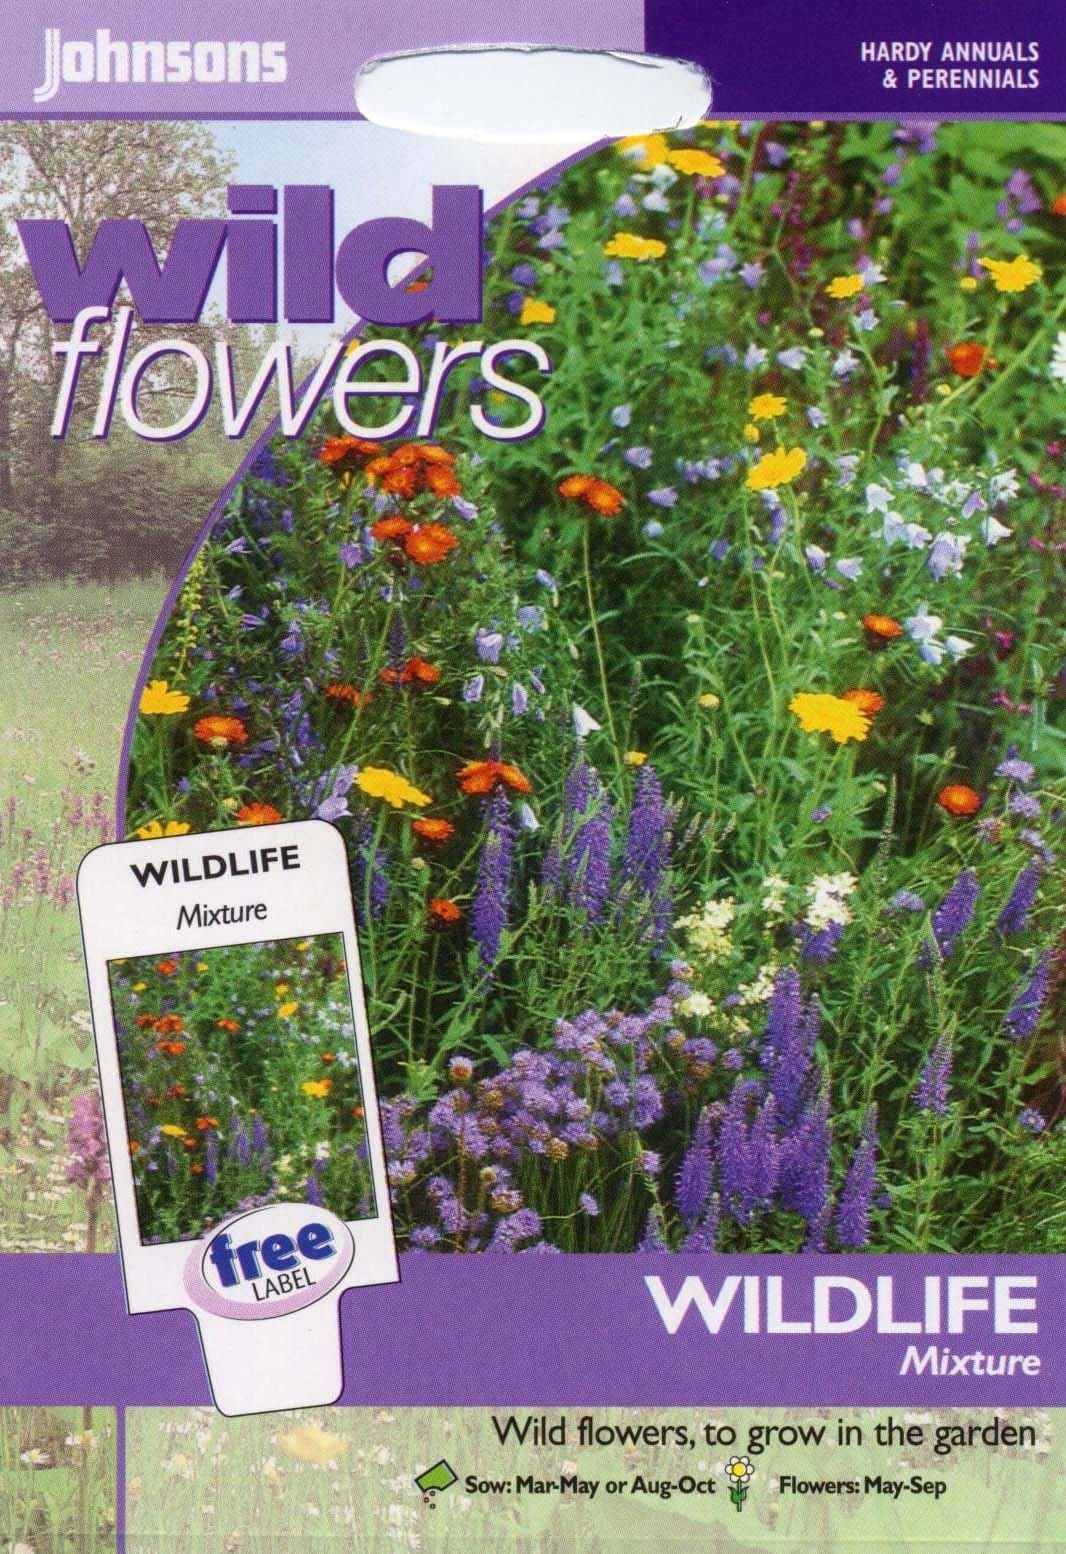 Johnsons Wildflower Wildlife Mixture